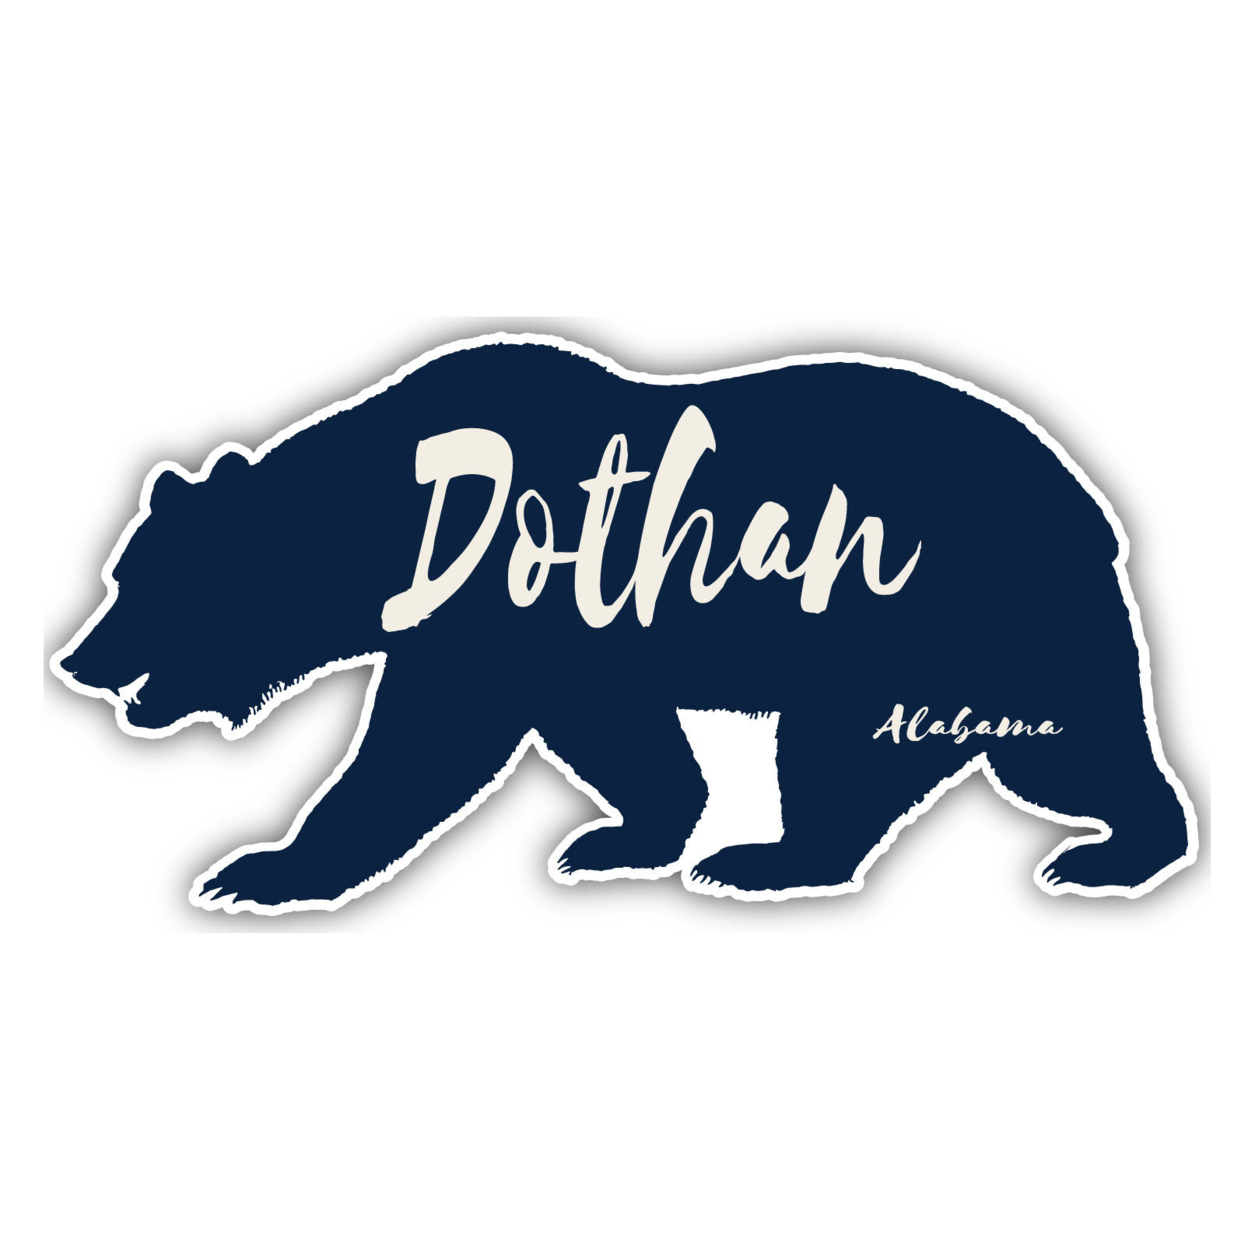 Dothan Alabama Souvenir Decorative Stickers (Choose Theme And Size) - Single Unit, 4-Inch, Tent